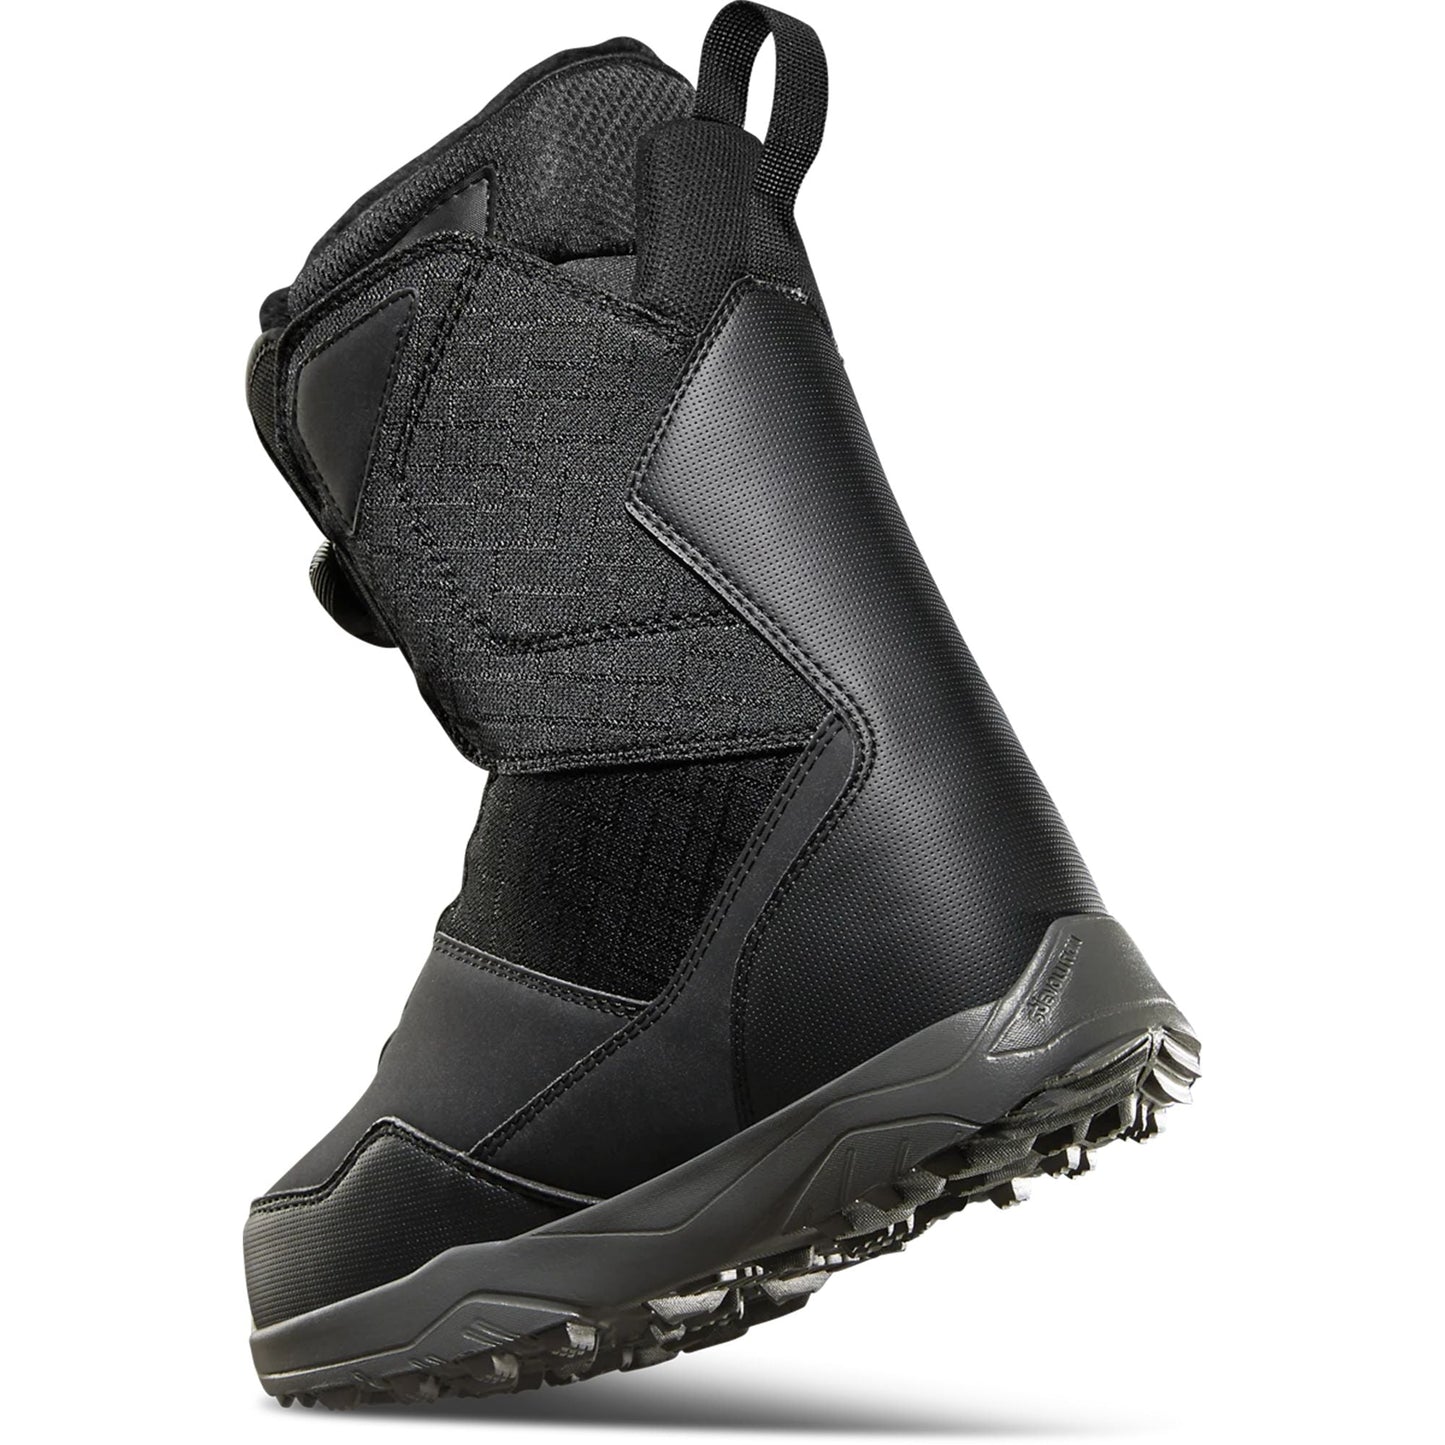 ThirtyTwo Women's Shifty BOA Snowboard Boots - Openbox Black 6.5 Snowboard Boots